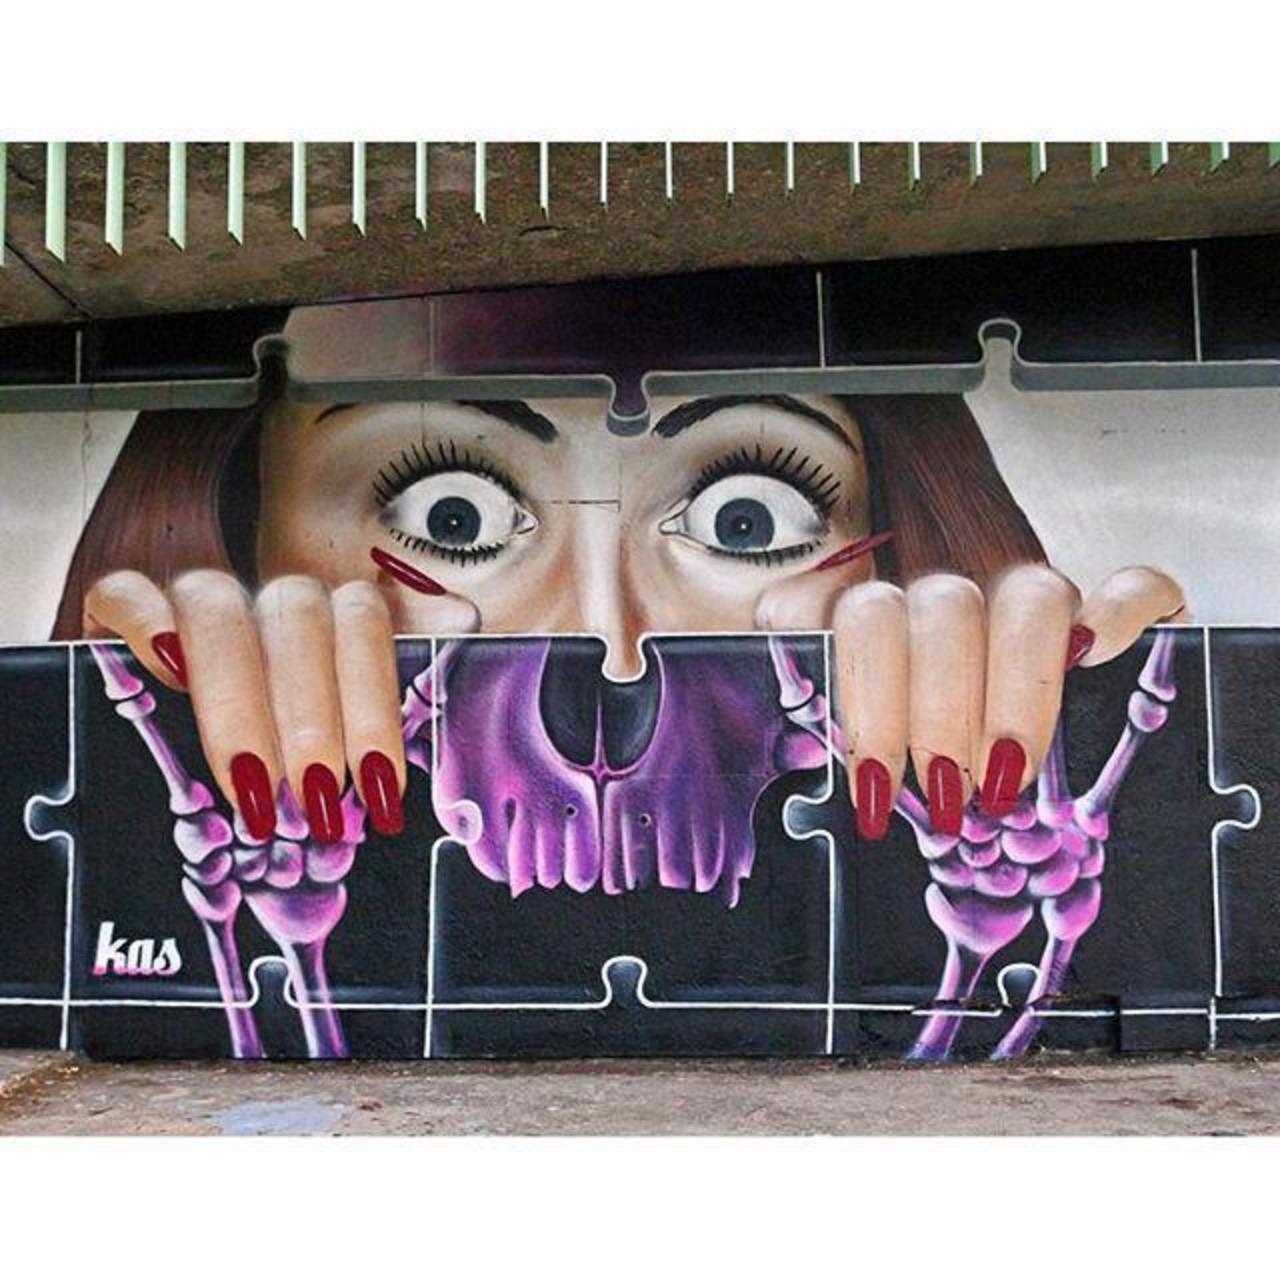 #streetart Open your #kasartofficial #lyon #france #switch #graffiti #bedifferent #arte #art https://t.co/AaMRqZZ1sI